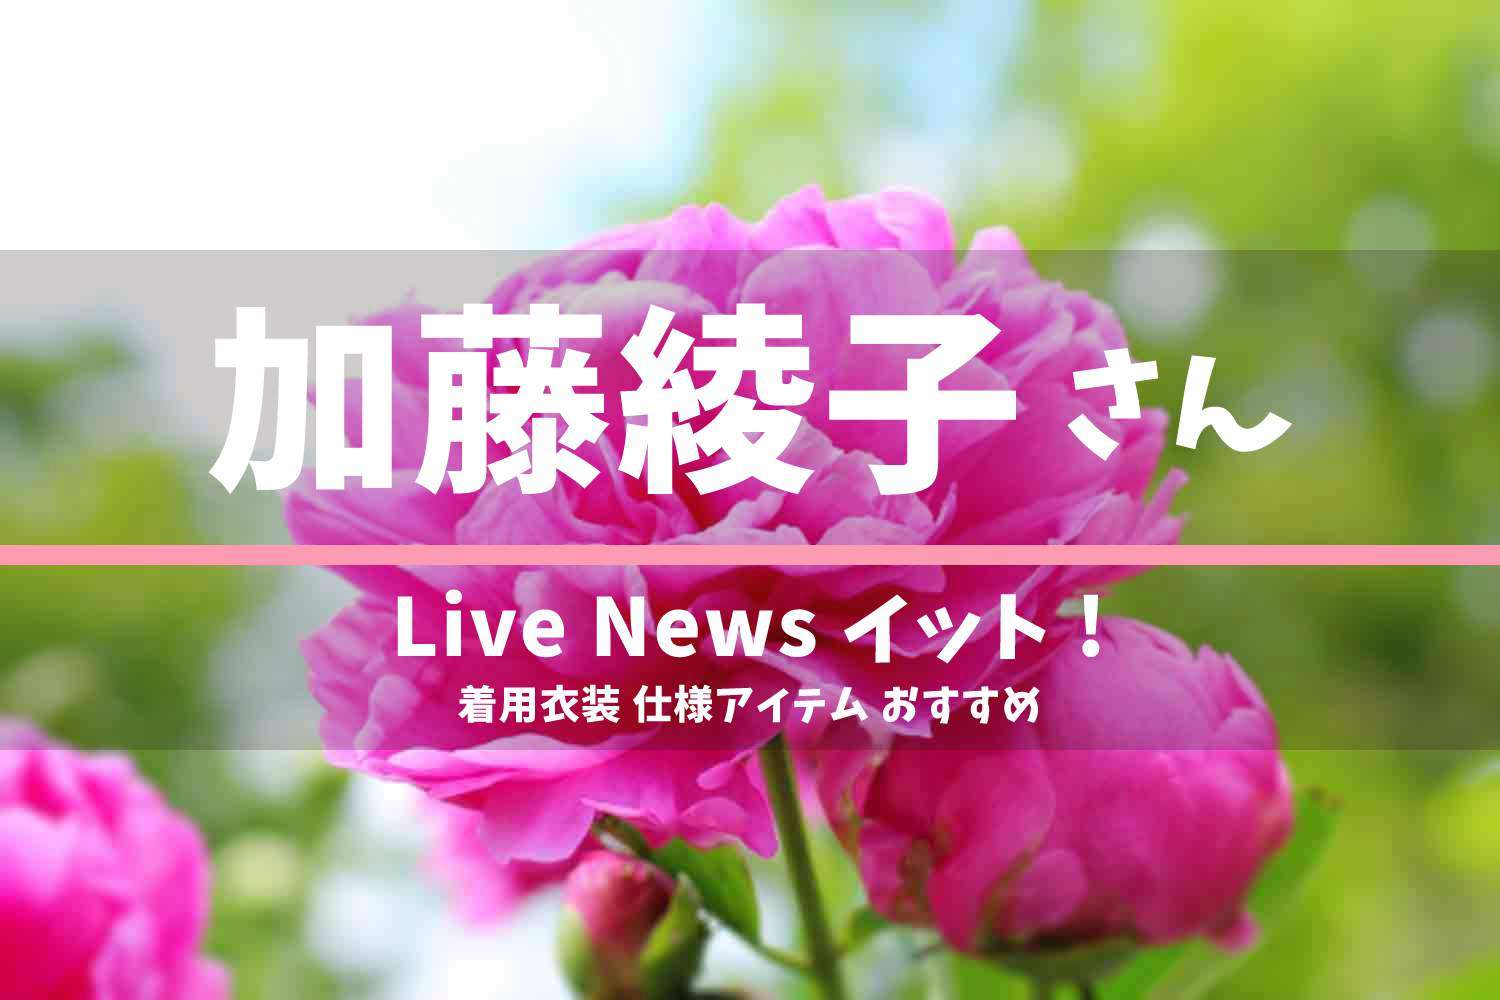 Live News イット! 加藤綾子さん 番組 衣装 2022年6月17日放送